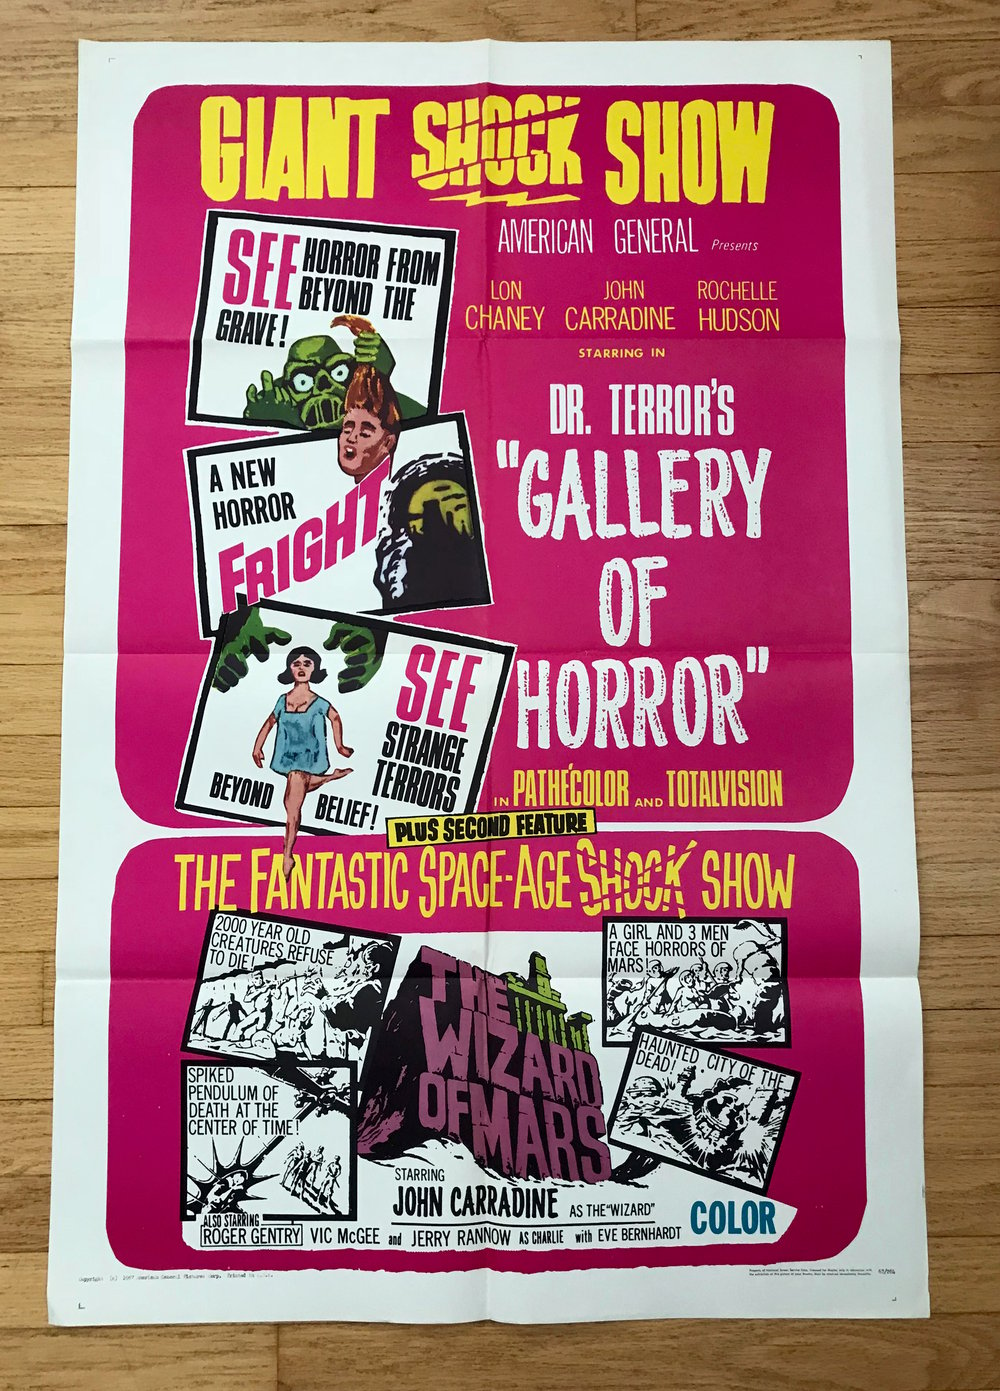 1967 DR. TERROR'S GALLERY OF HORROR/WIZARD OF MARS Original U.S. Double-Bill One Sheet Movie Poster